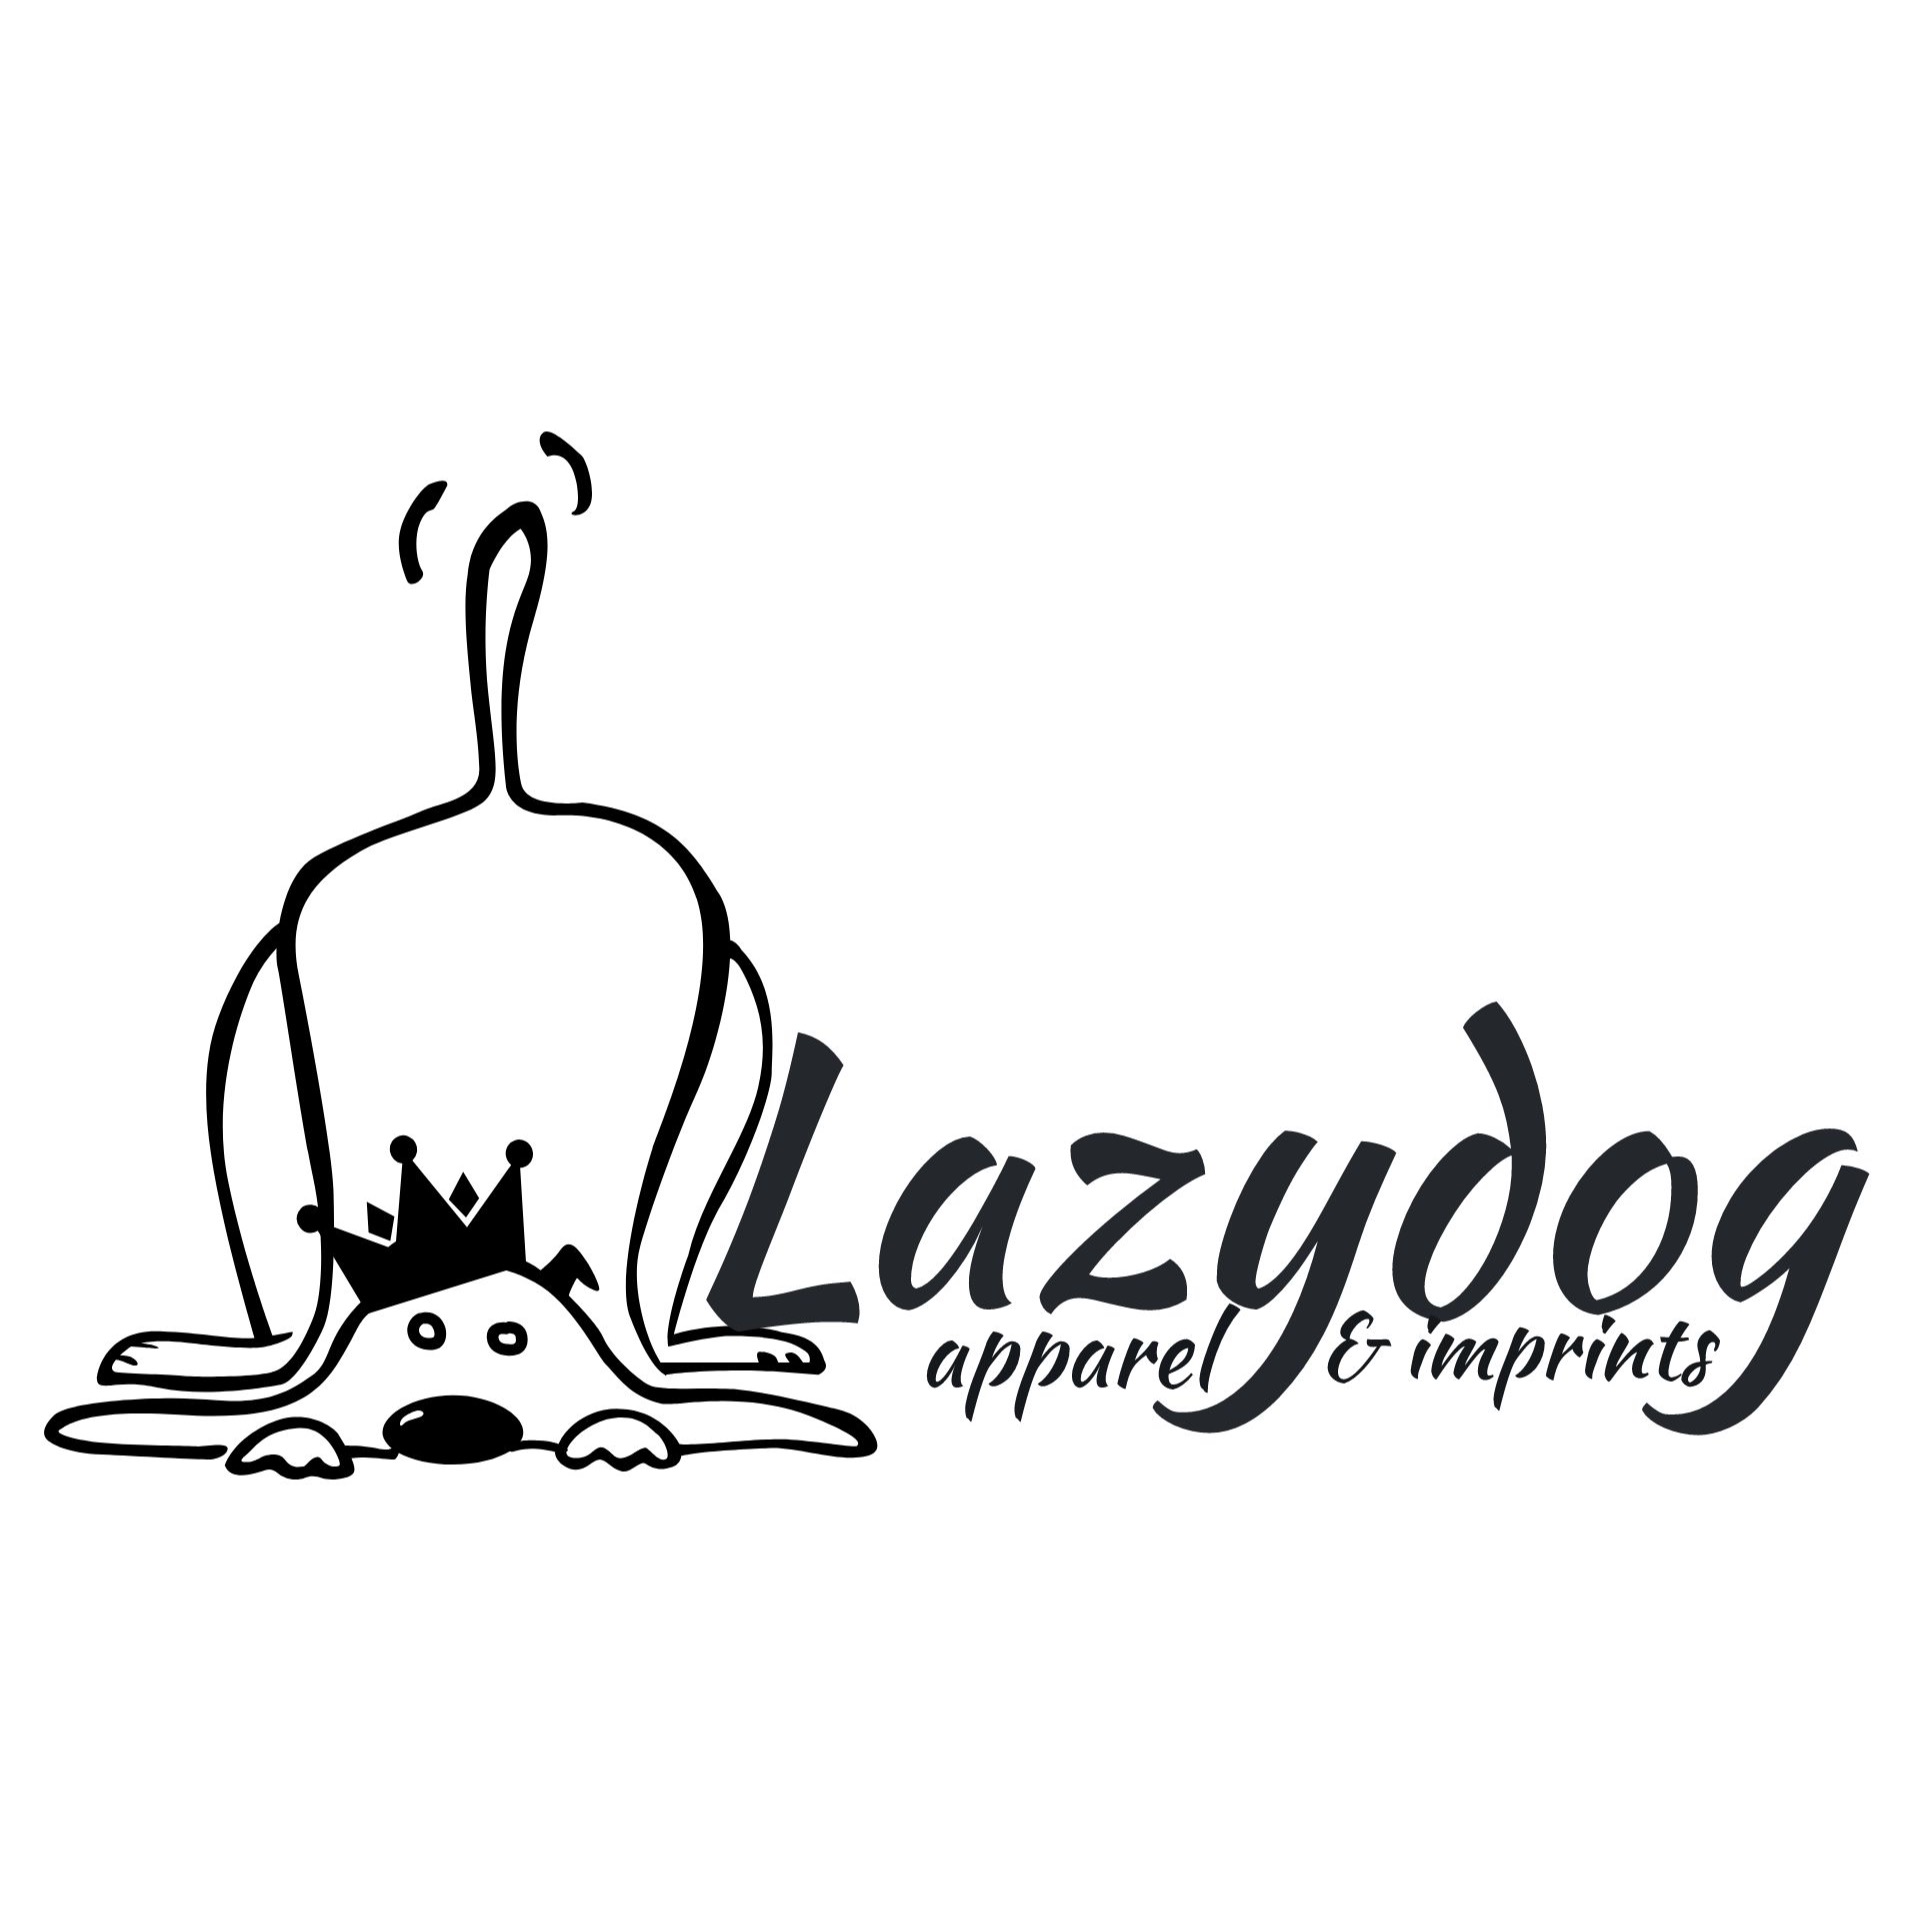 LazyDog Apparel and Imprints